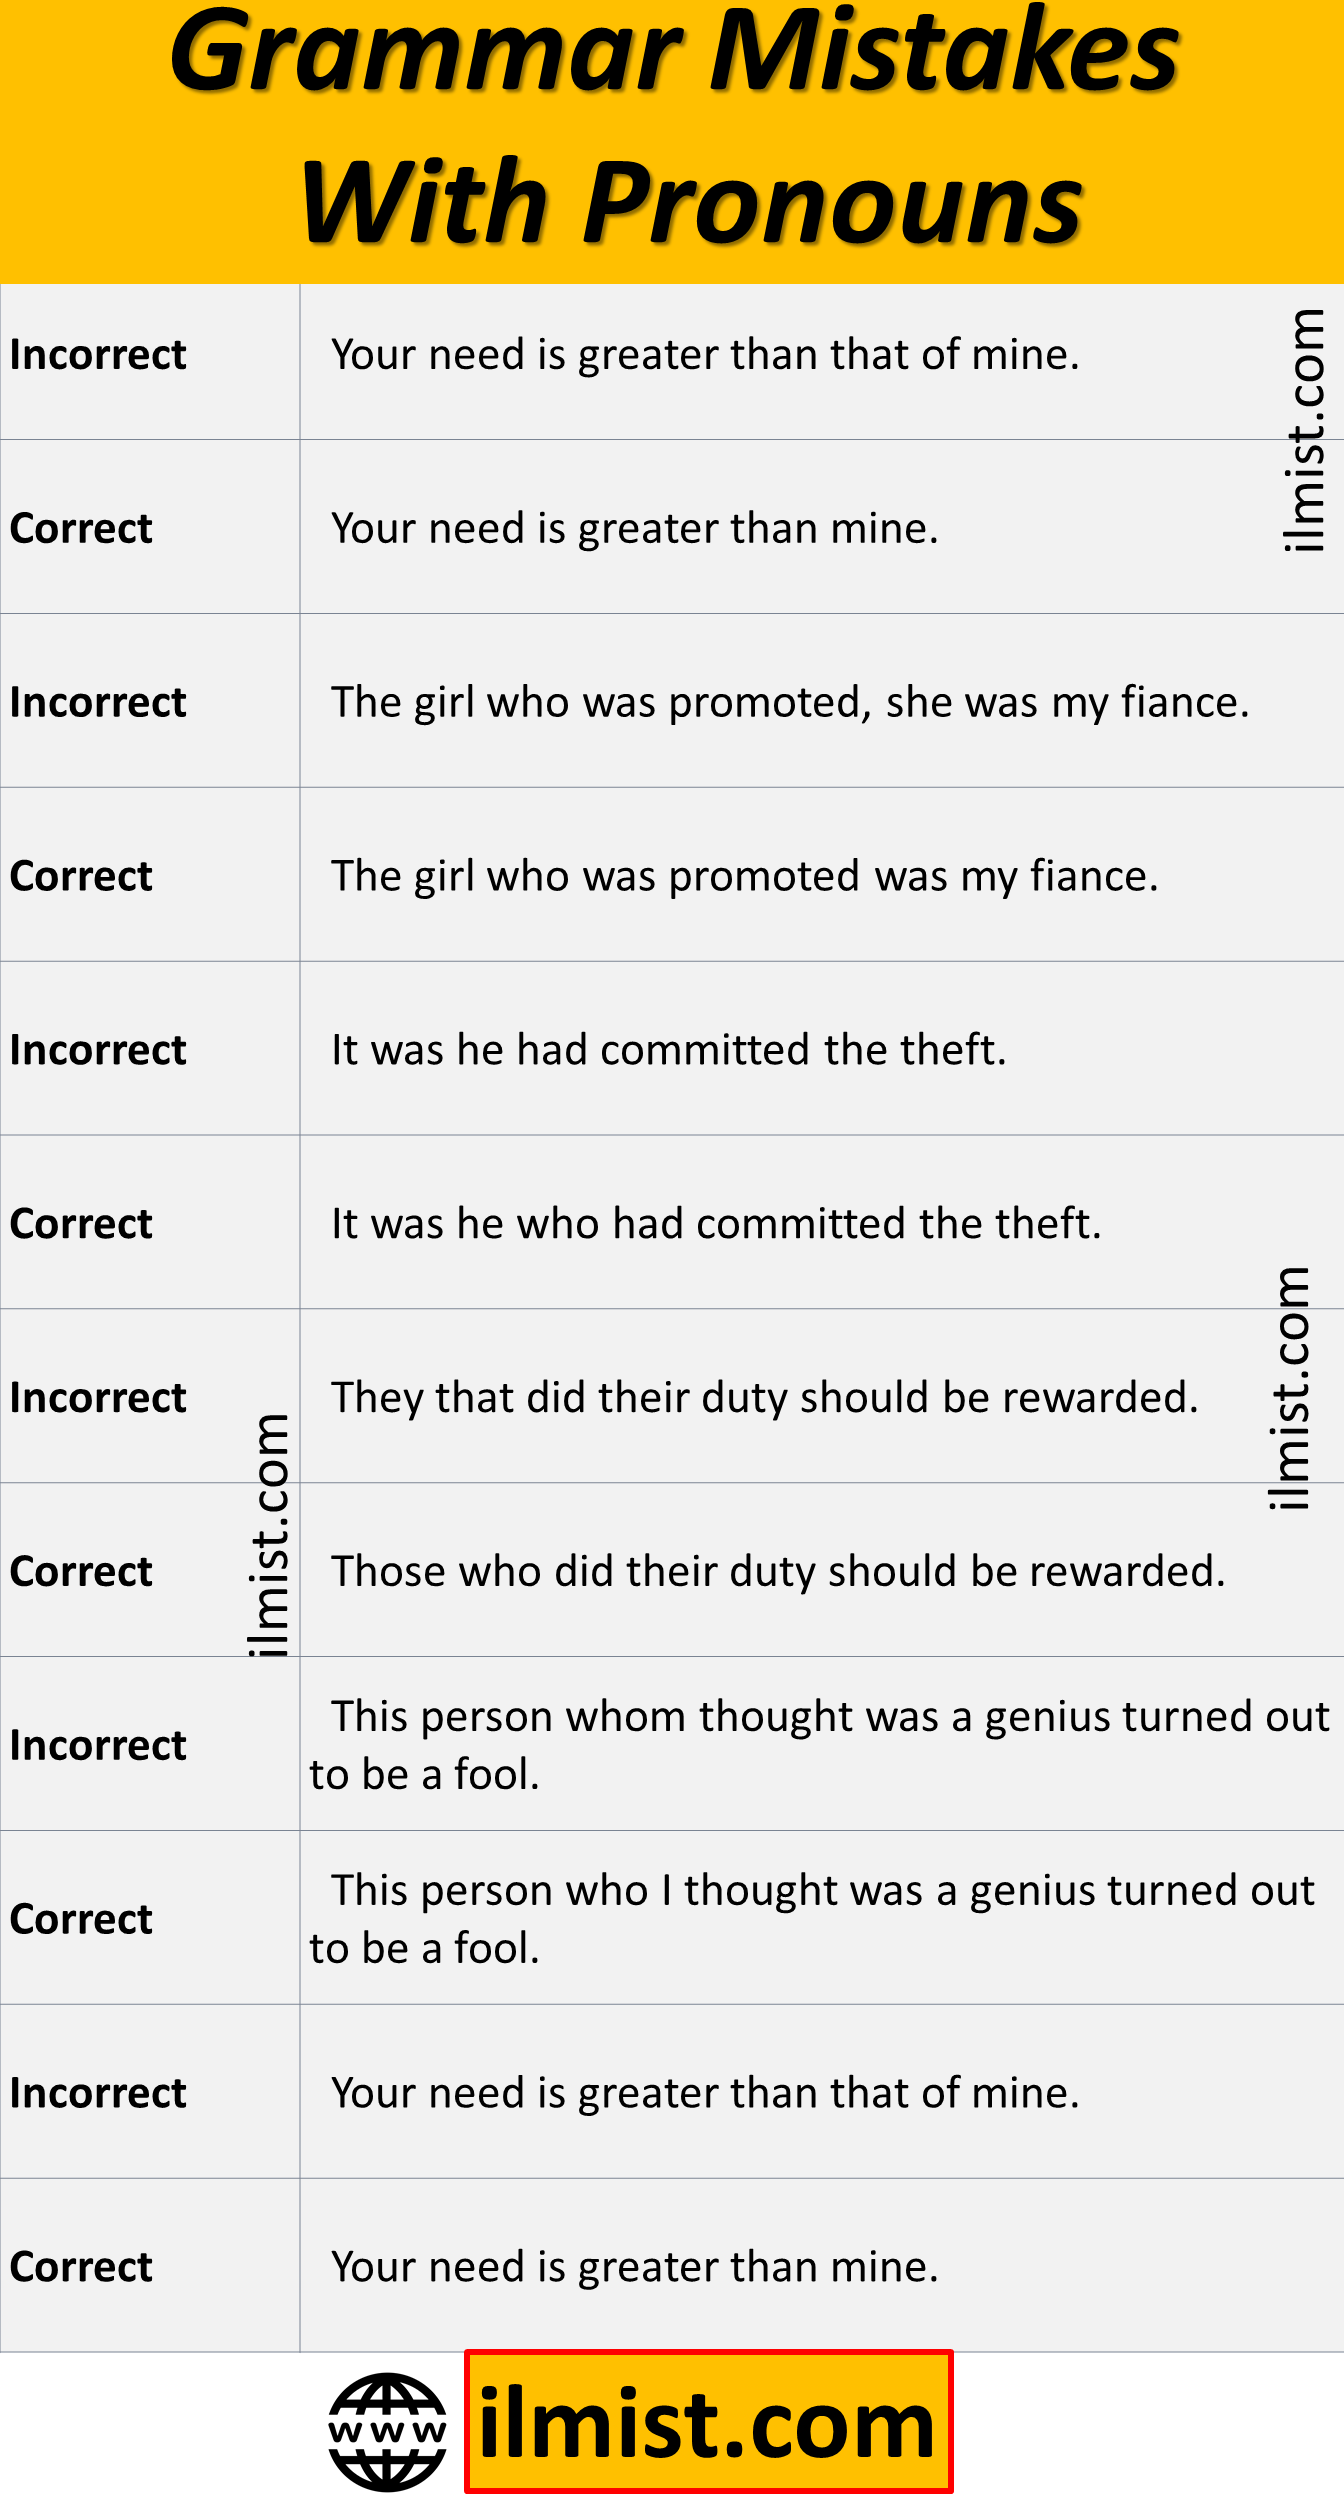 Pronouns Definition | Common Mistakes With Pronouns